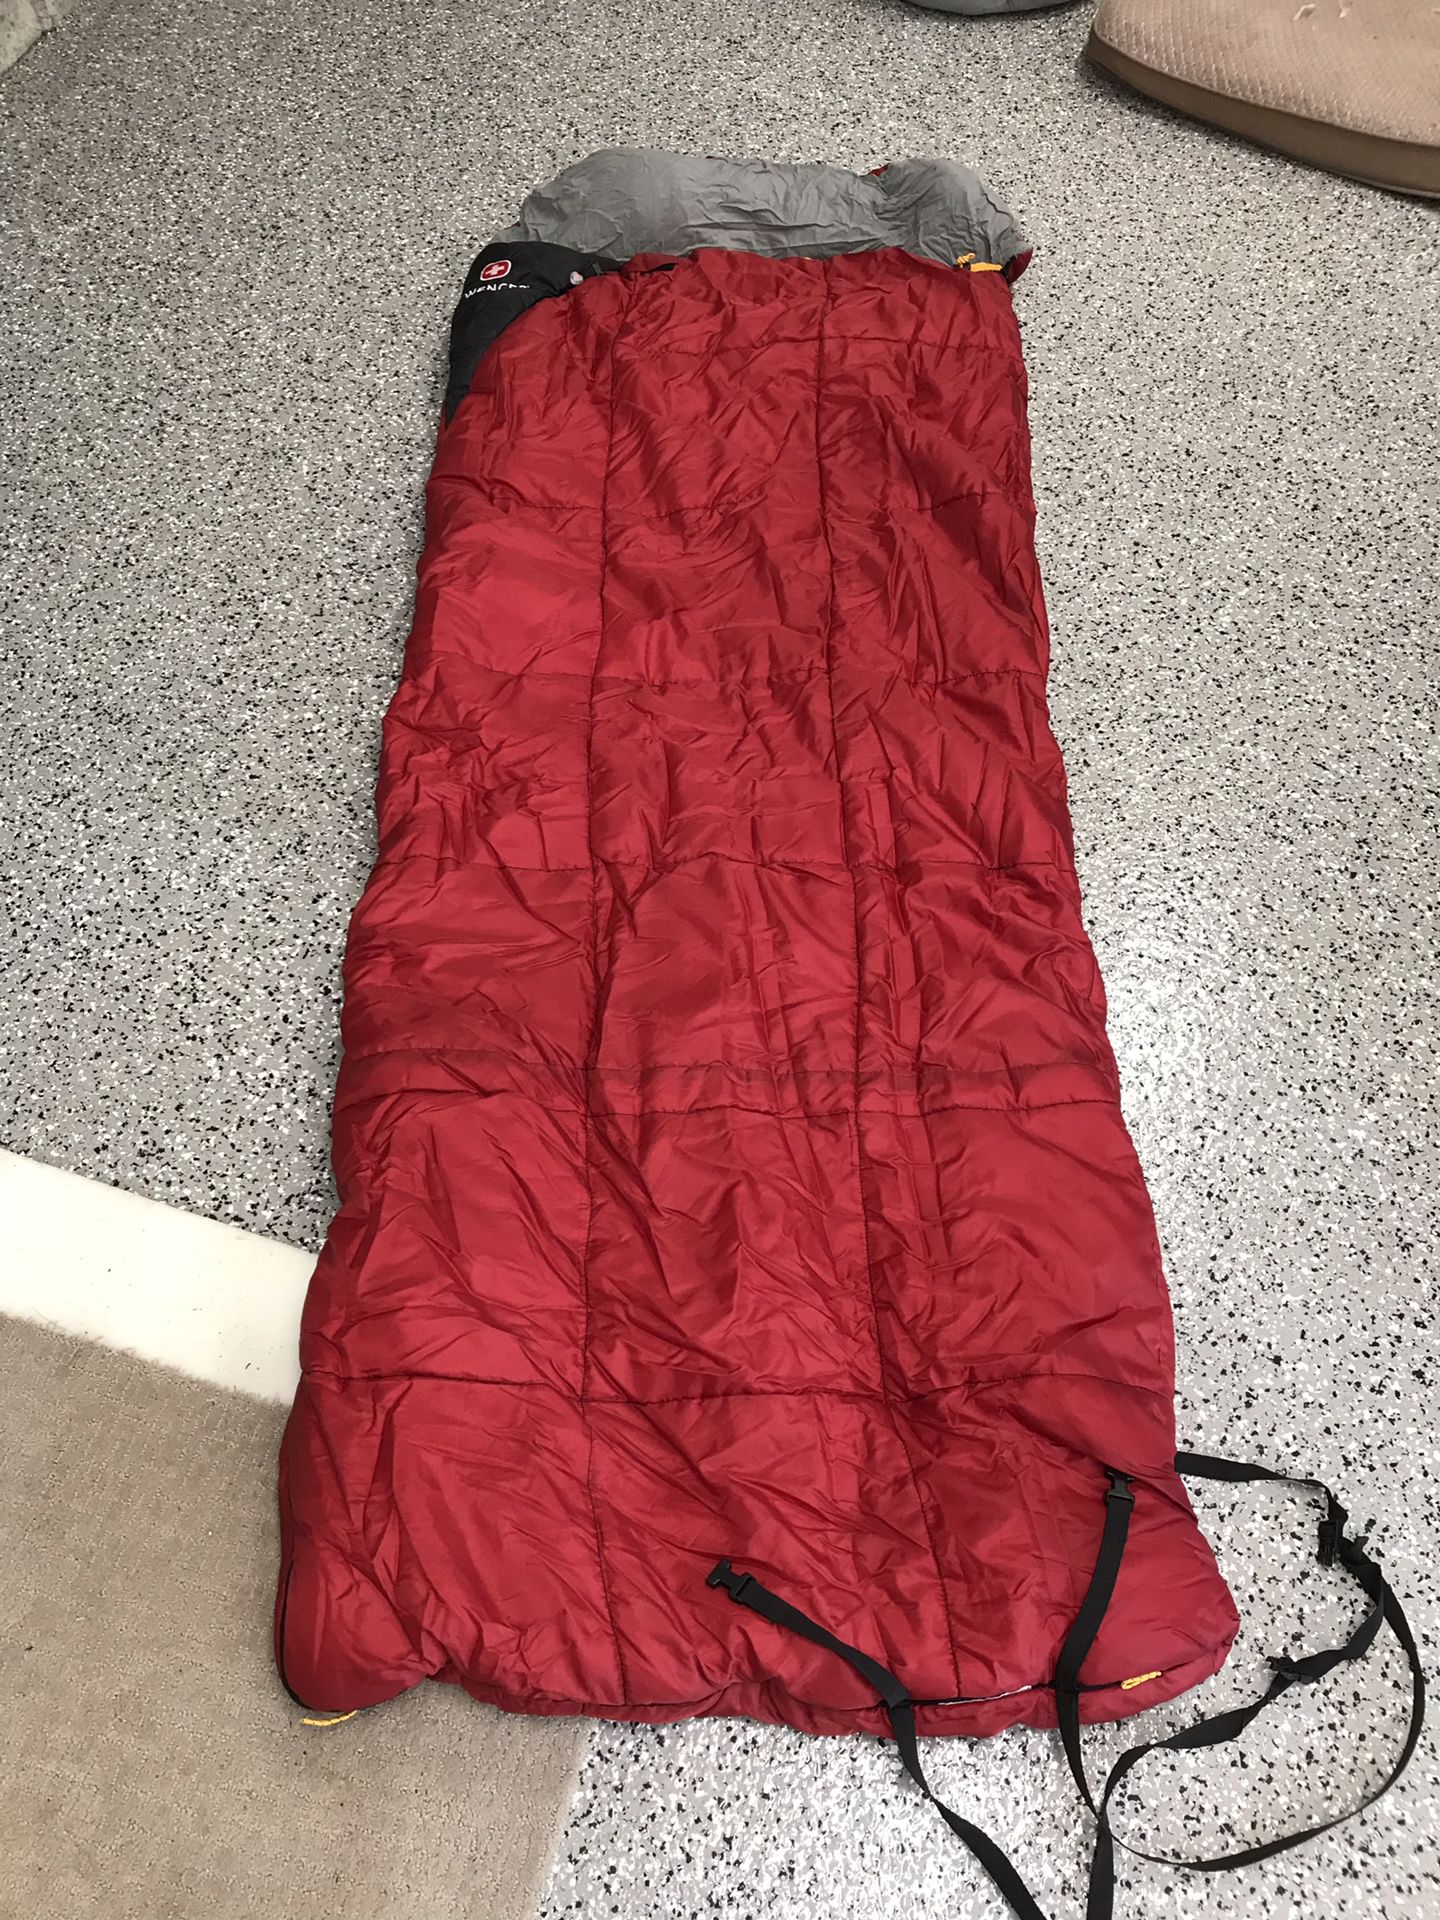 Wenger sleeping bag